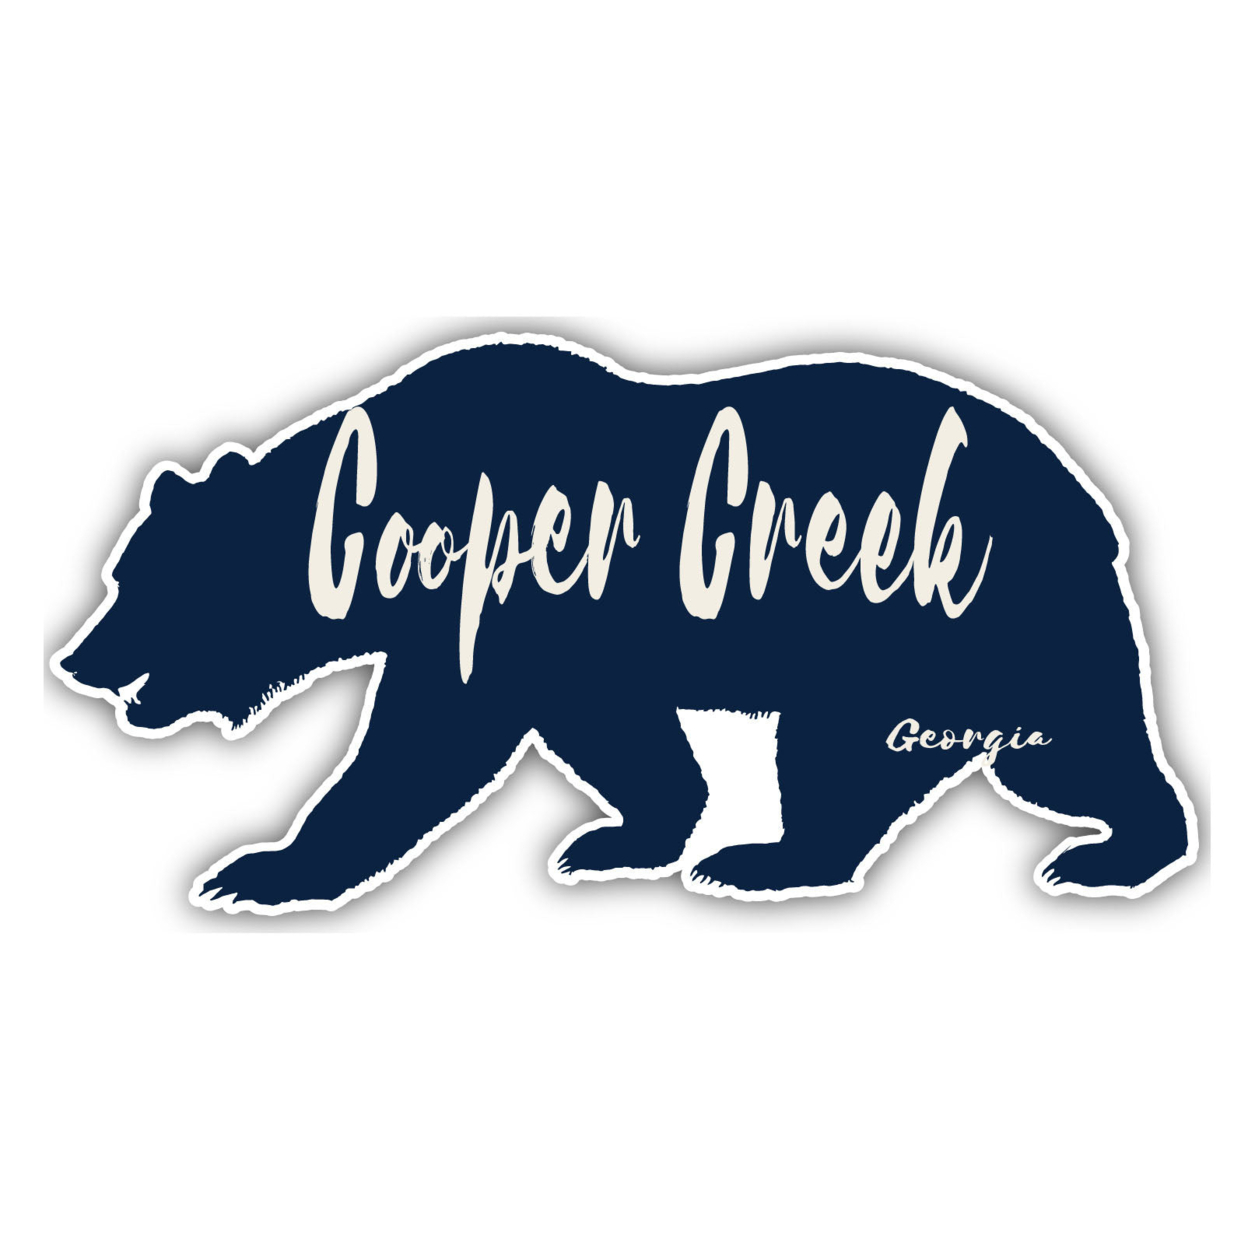 Cooper Creek Georgia Souvenir Decorative Stickers (Choose Theme And Size) - 4-Pack, 8-Inch, Bear